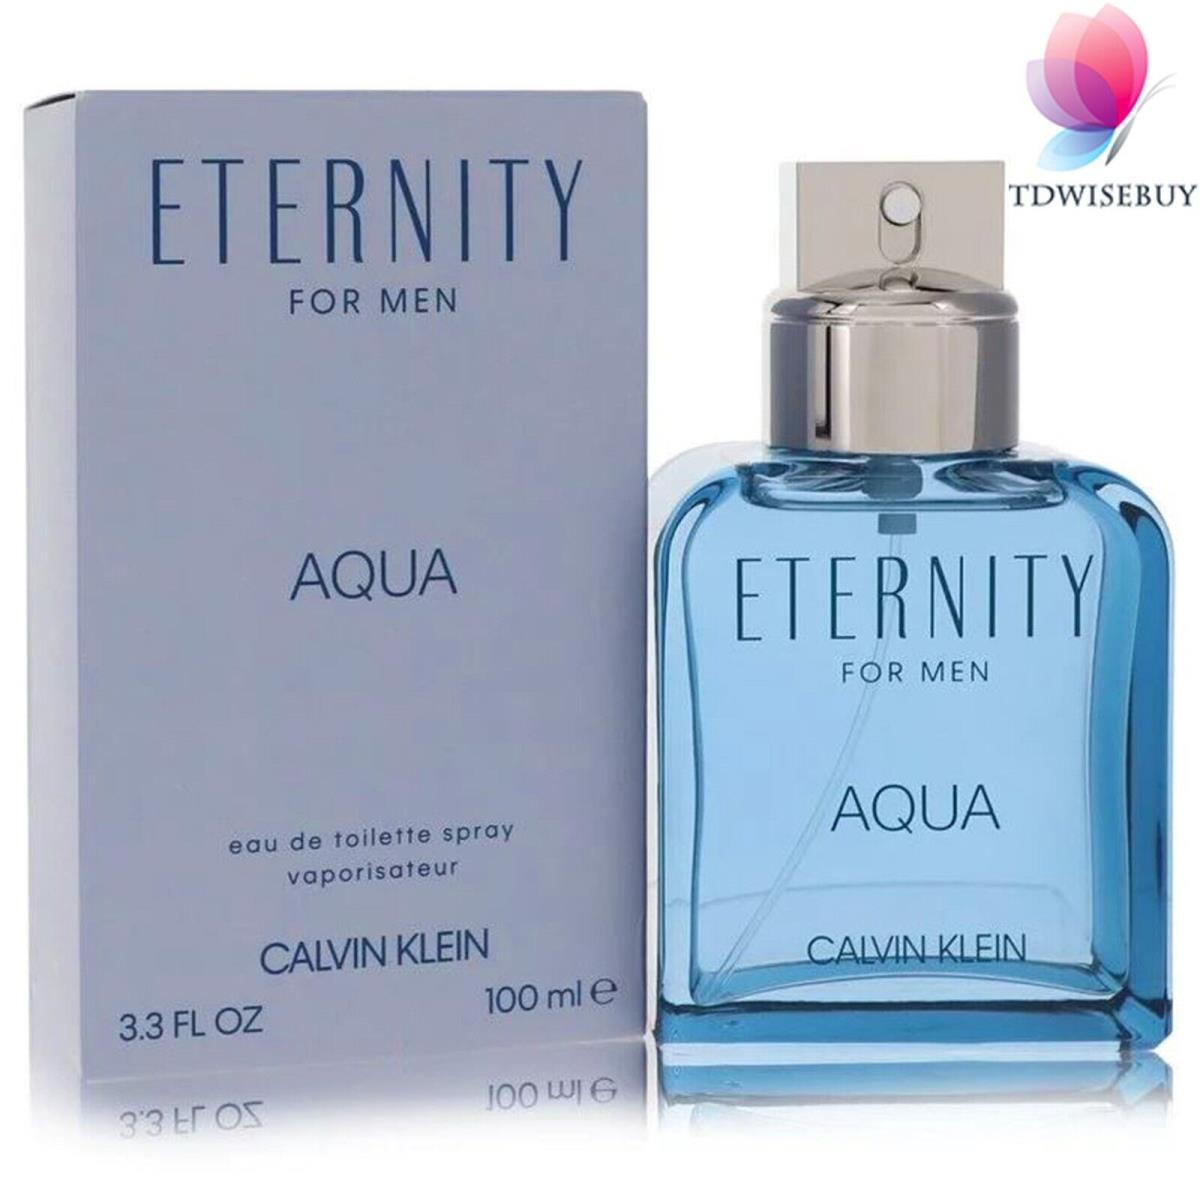 Eternity Aqua Cologne Men Perfume by Calvin Klein Eau De Toilette Spray 3.4 oz